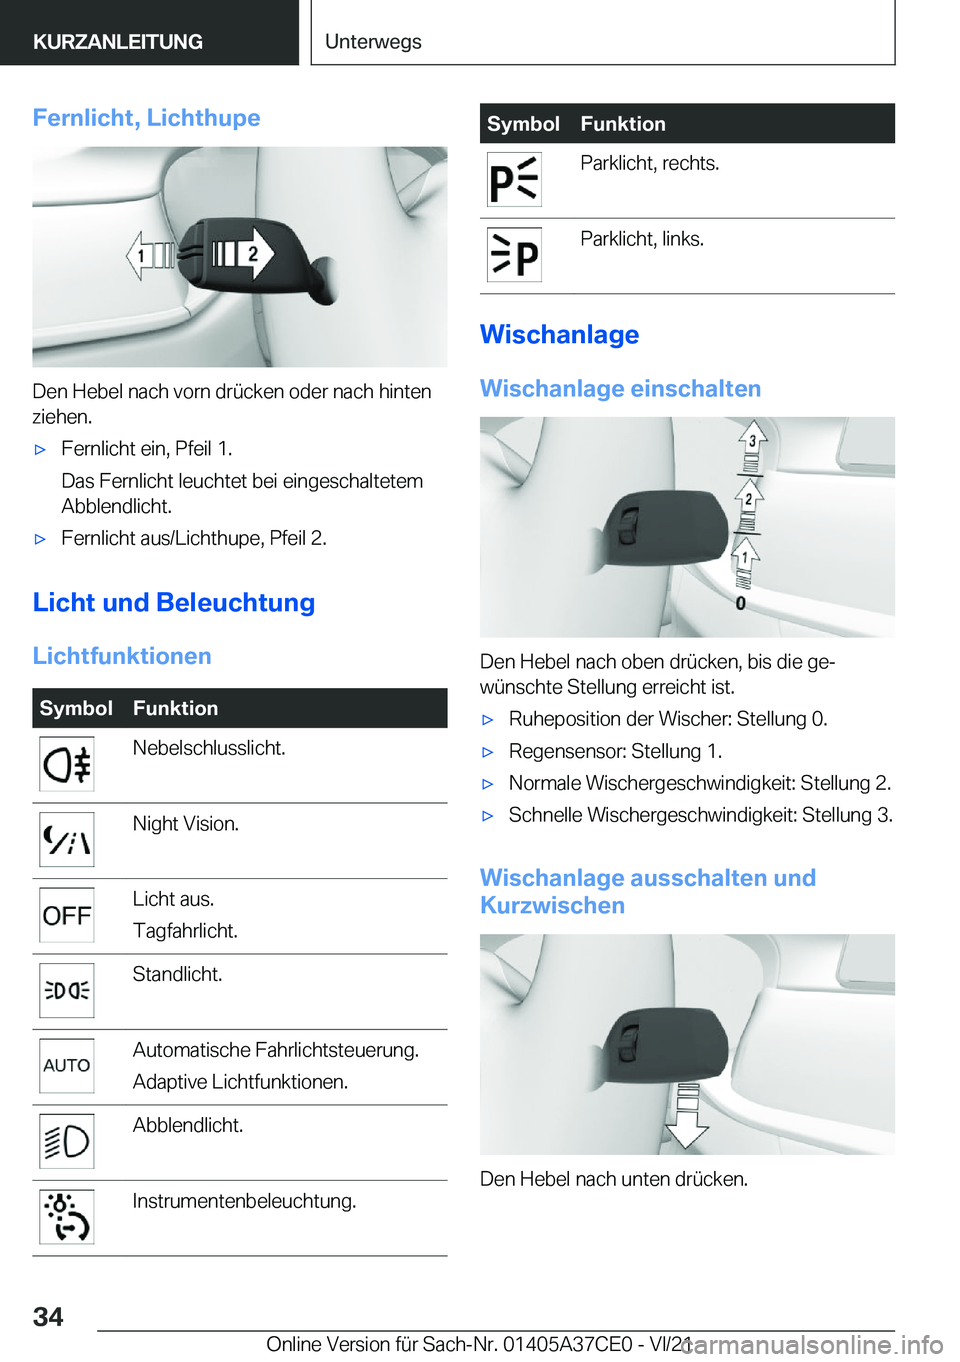 BMW X5 2022  Betriebsanleitungen (in German) �F�e�r�n�l�i�c�h�t�,��L�i�c�h�t�h�u�p�e
�D�e�n��H�e�b�e�l��n�a�c�h��v�o�r�n��d�r�